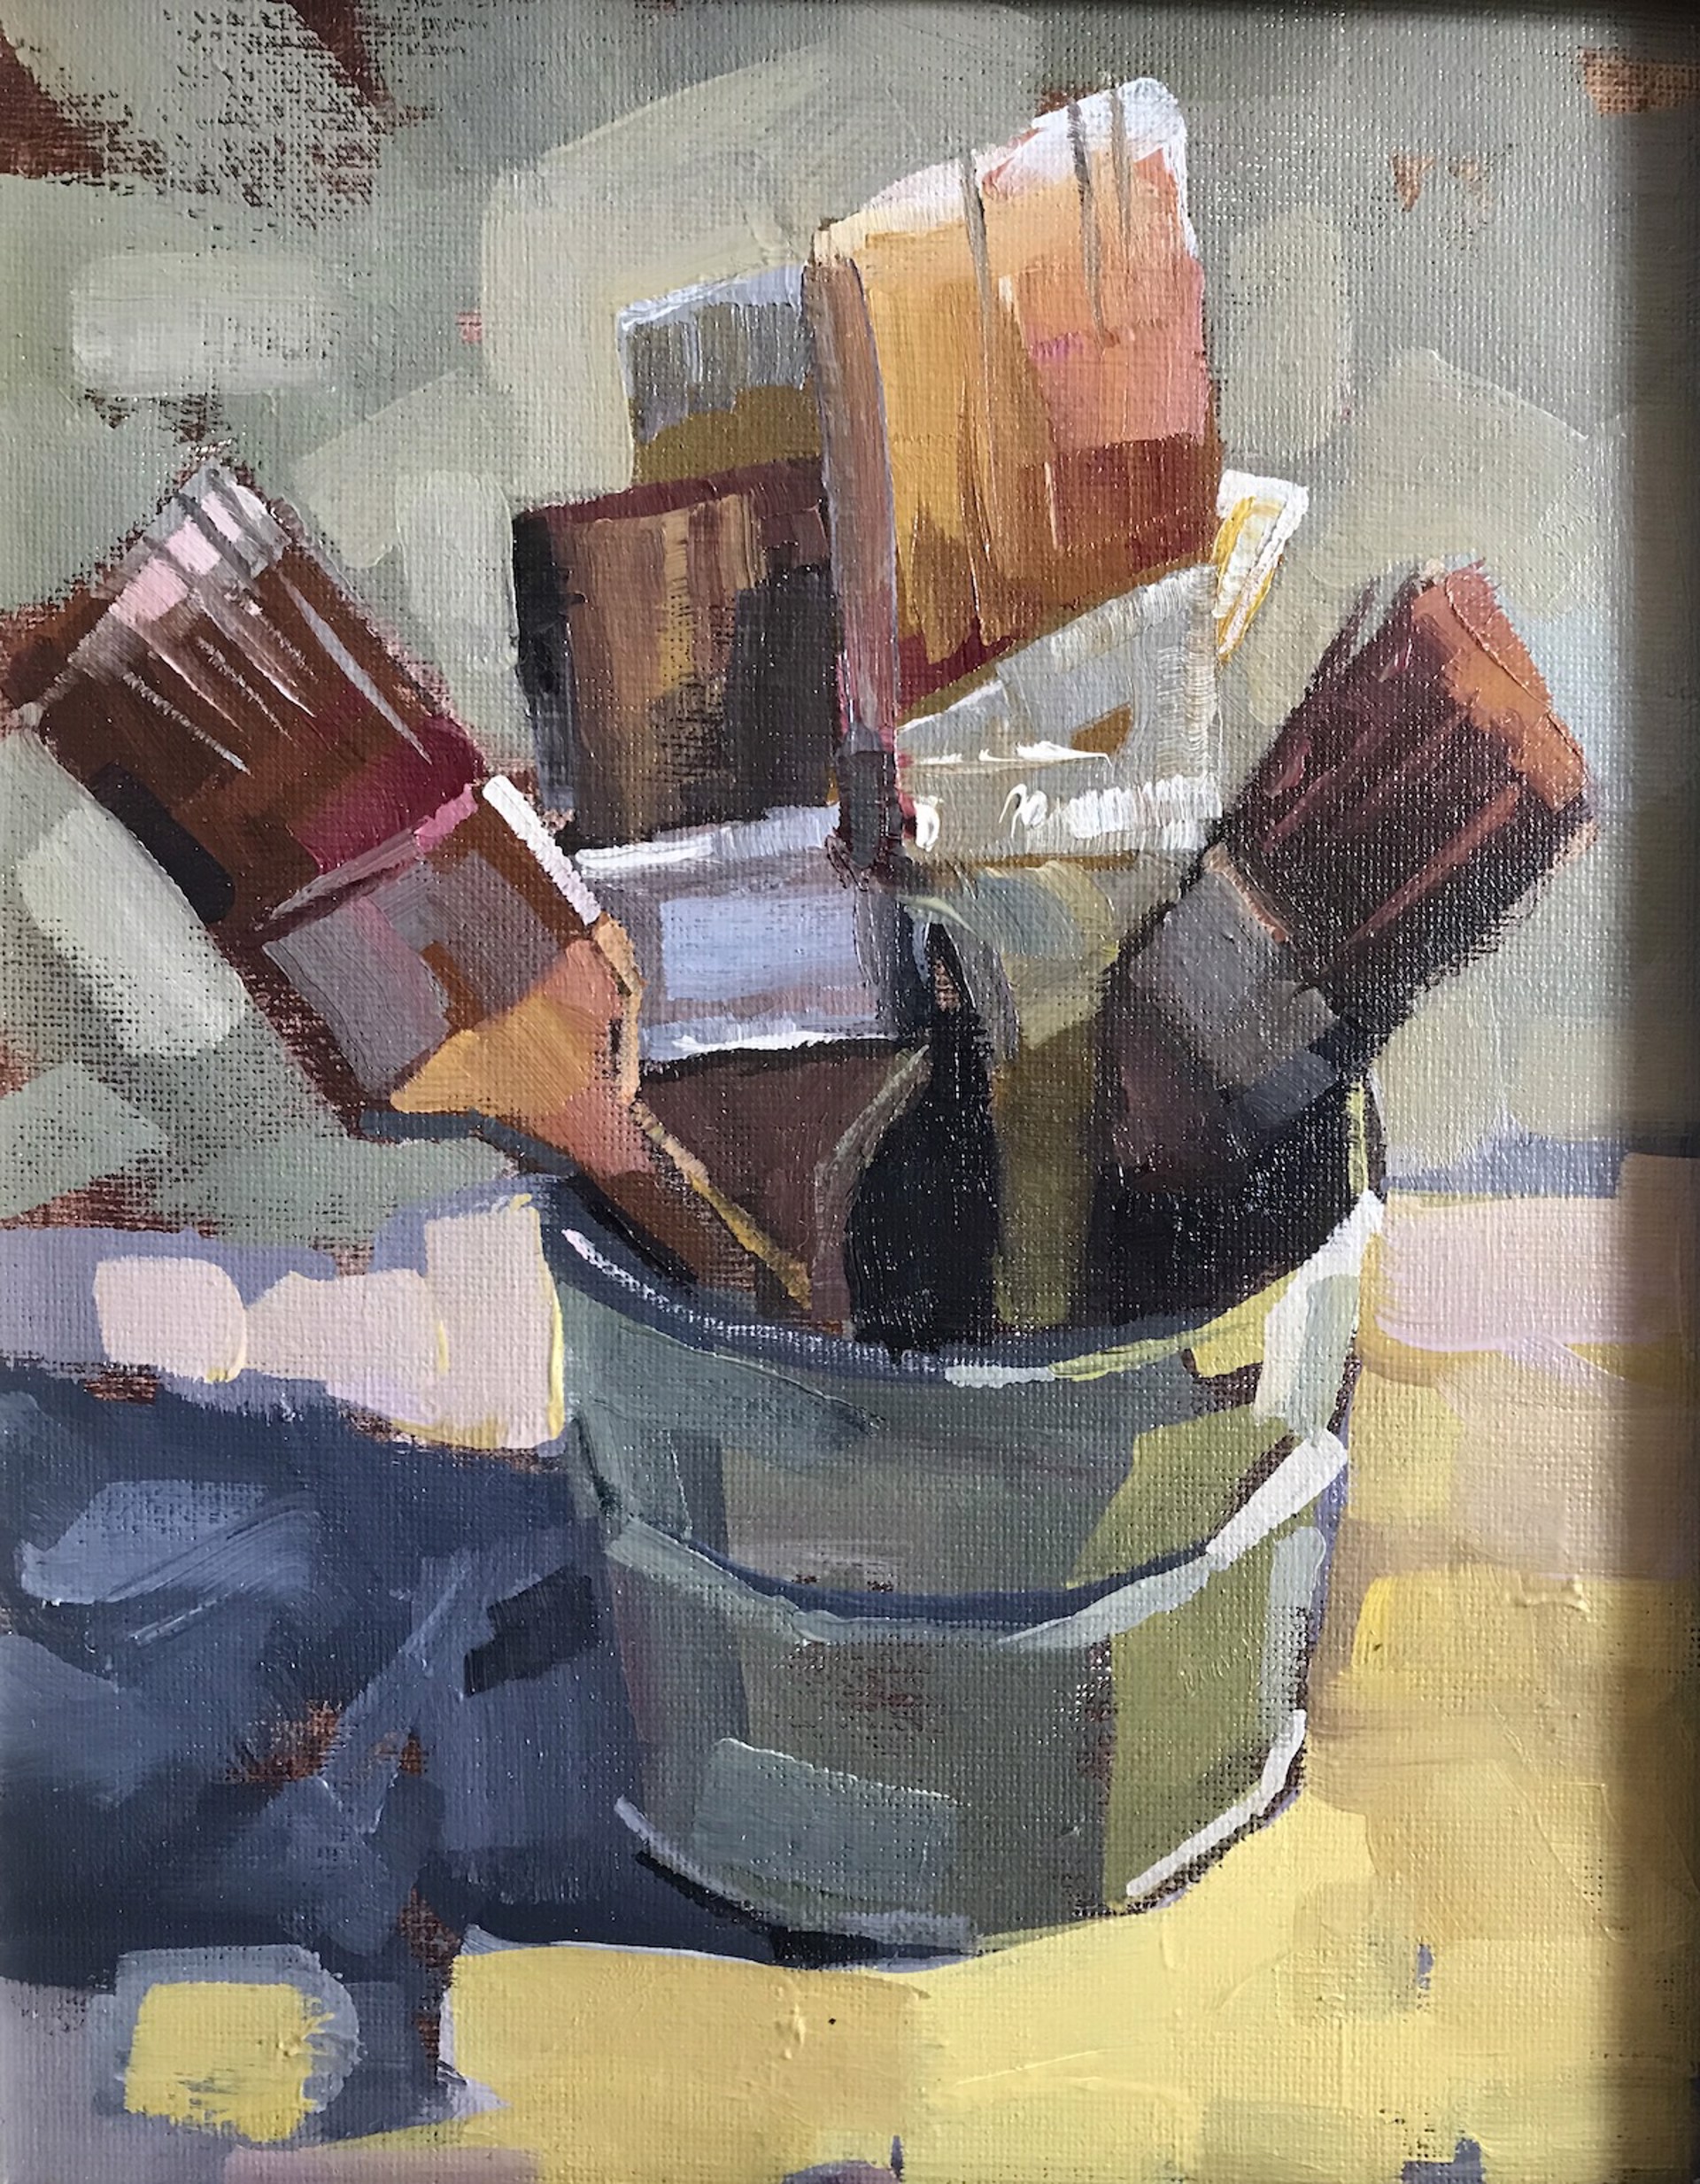 Bundle of Brushes by Gerard Martin